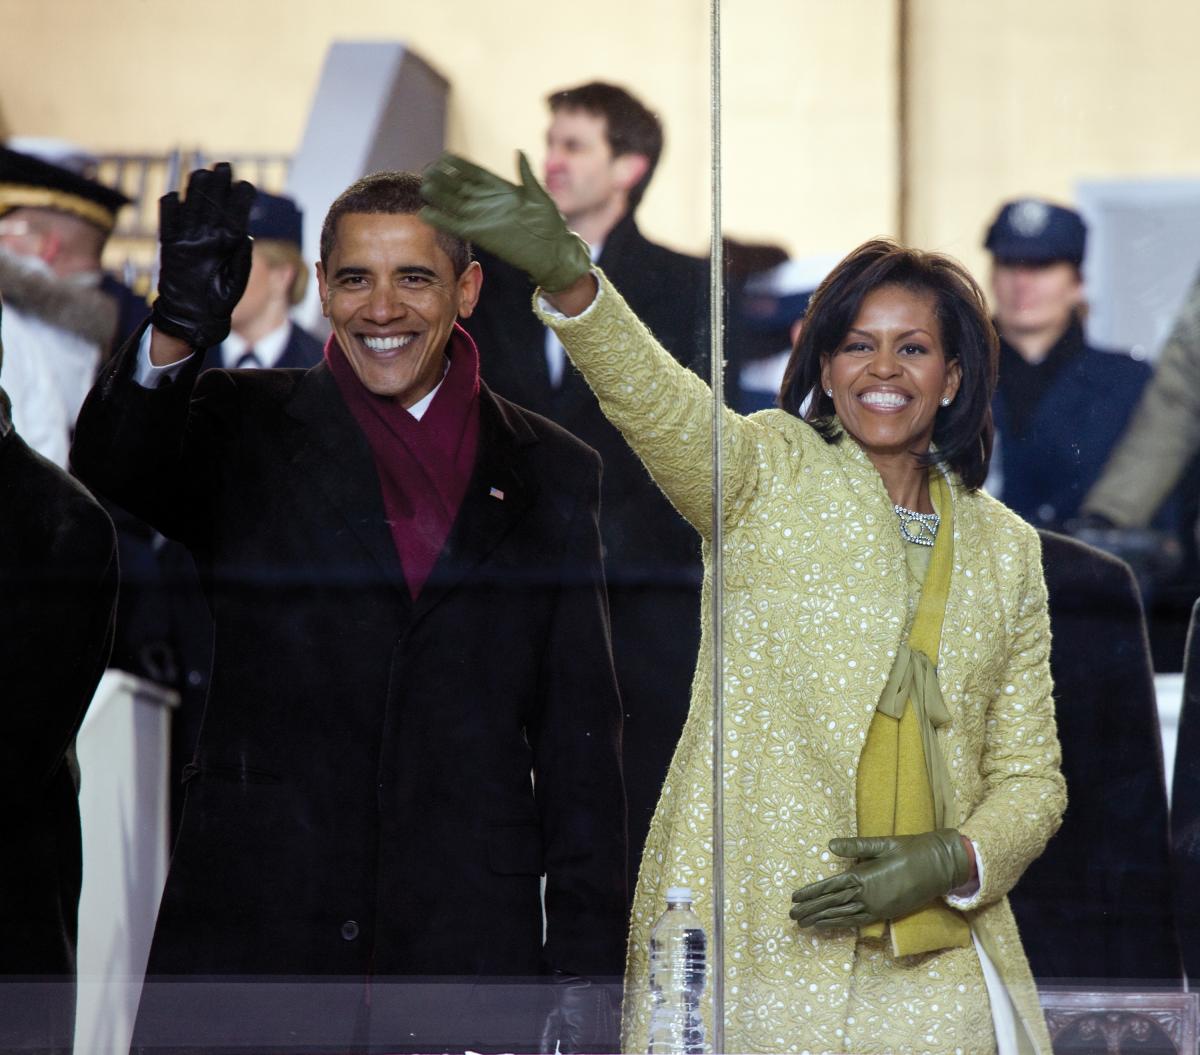 colored photo of Barack Obama and Michelle Obama waving